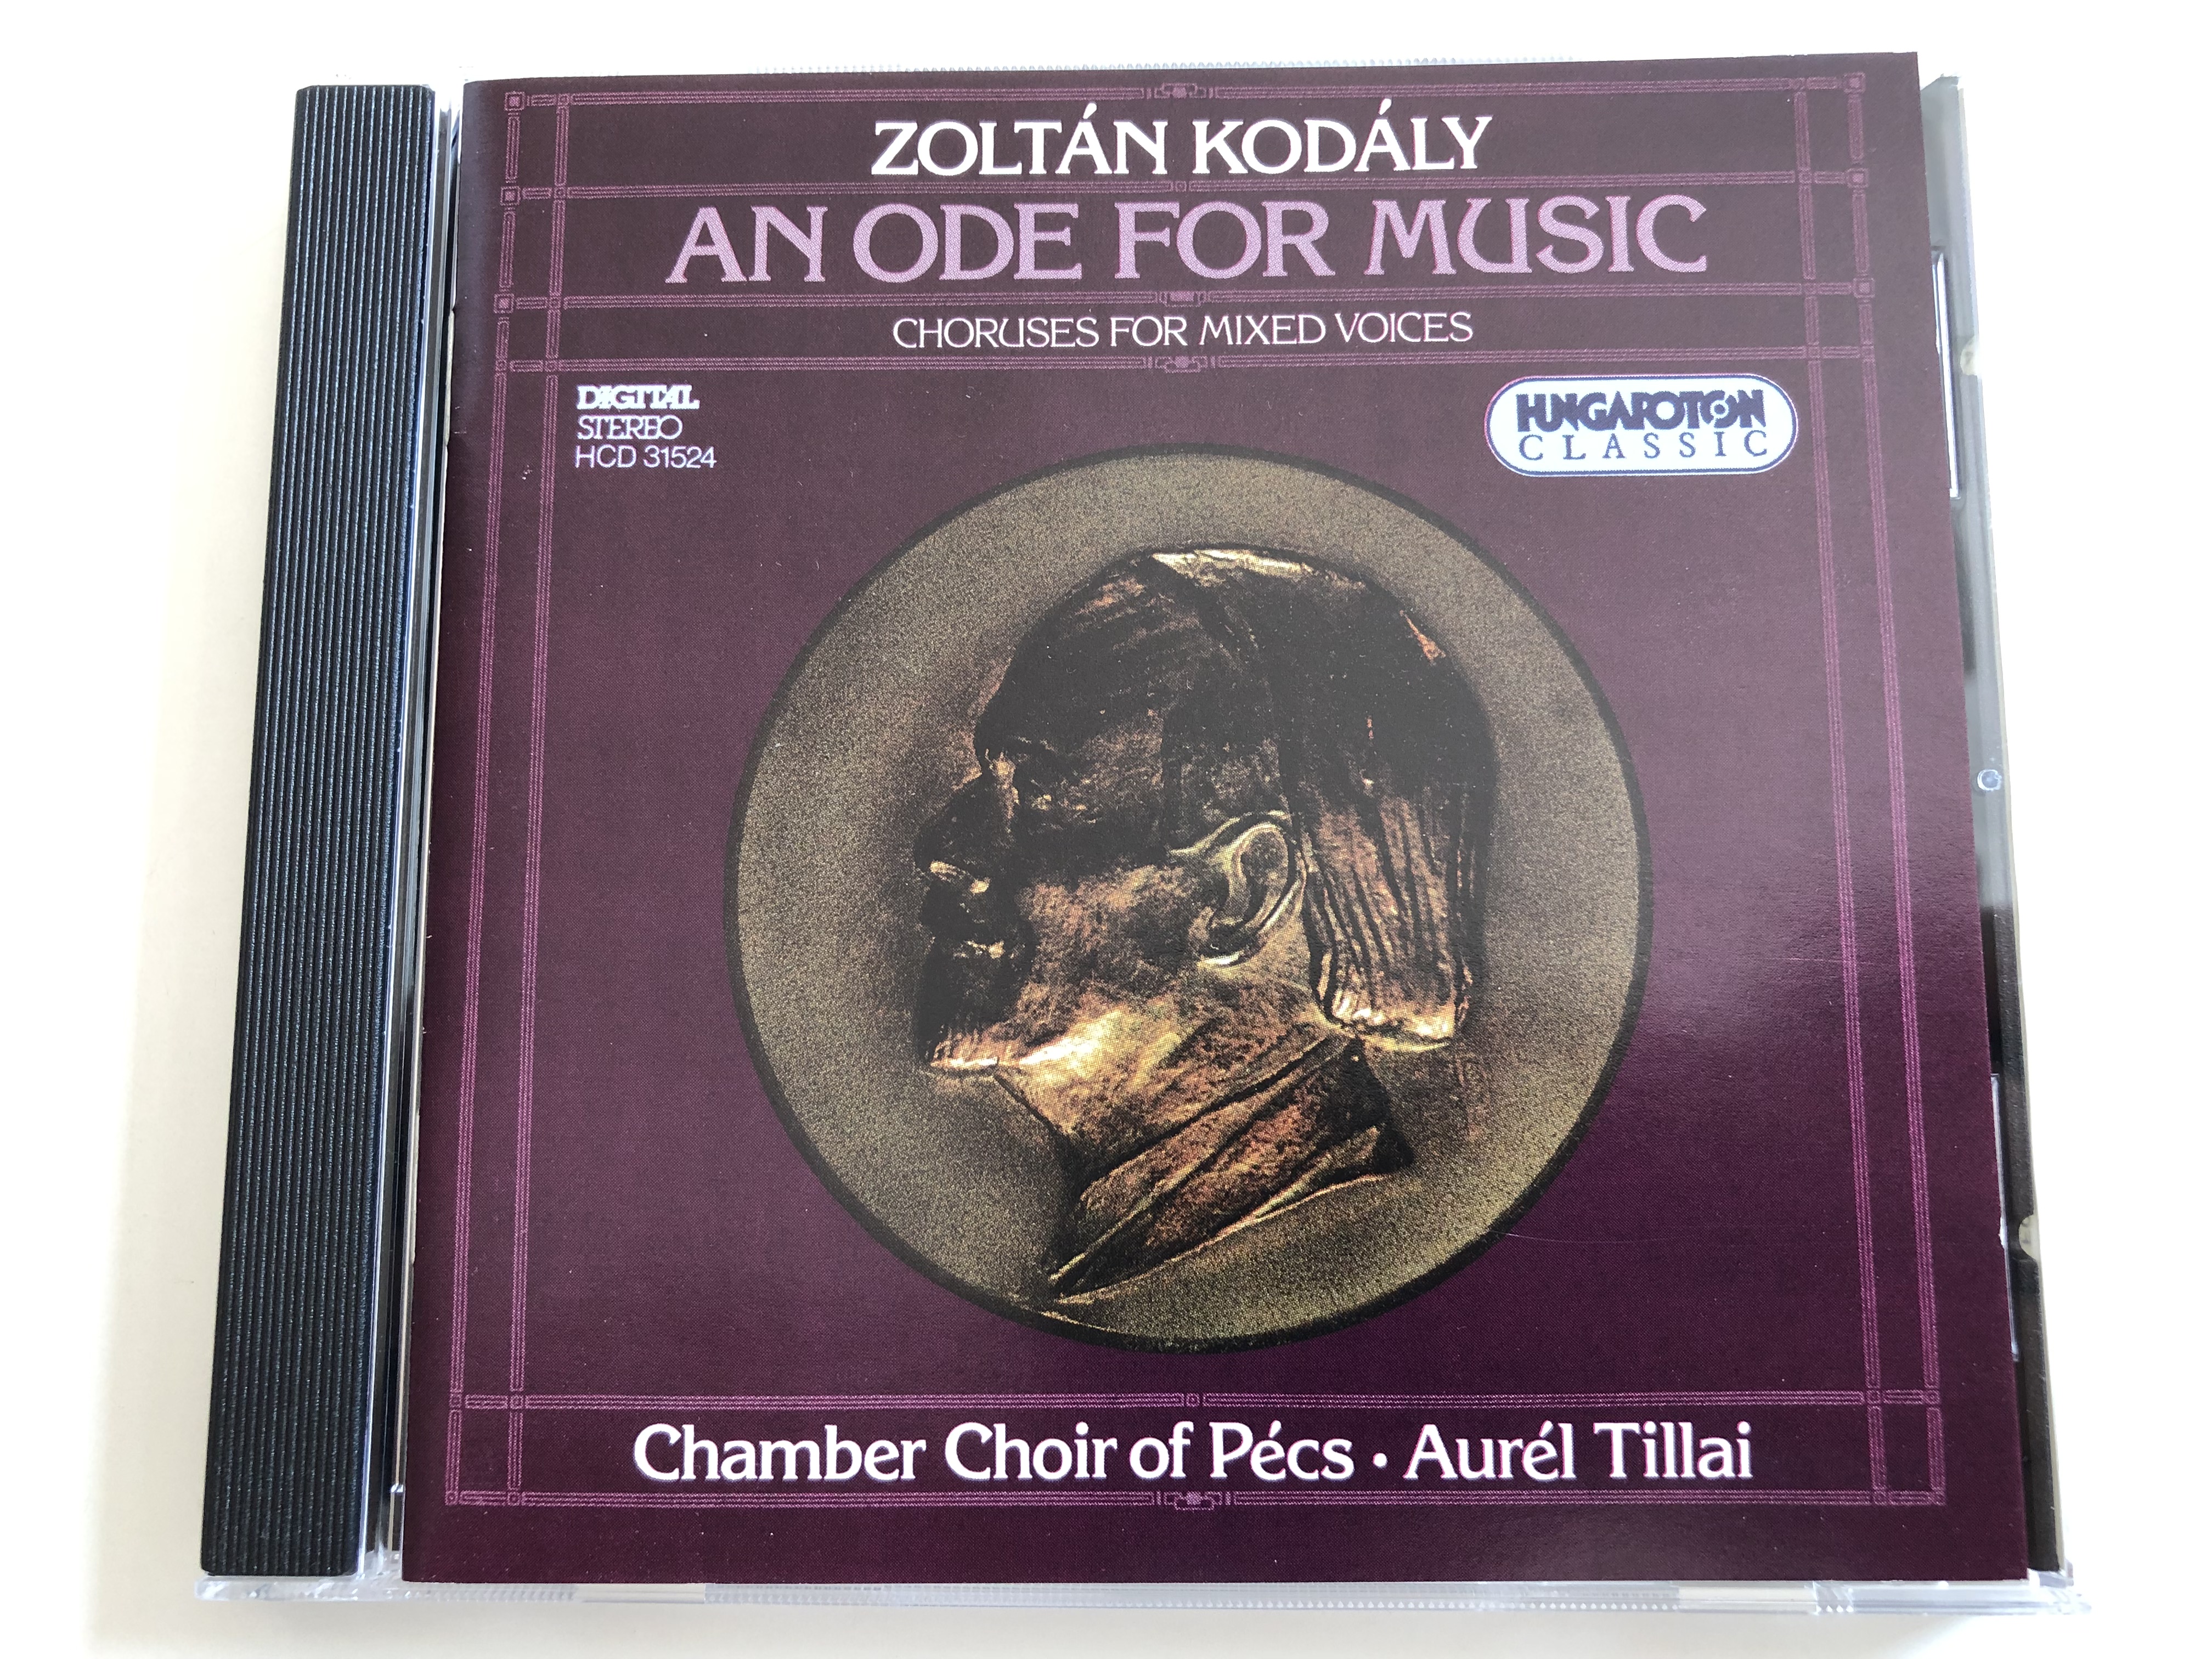 zolt-n-kod-ly-an-ode-for-music-choruses-for-mixed-voices-chamber-choir-of-p-cs-aur-l-tillai-hungaroton-classic-audio-cd-1994-hcd-31524-1-.jpg